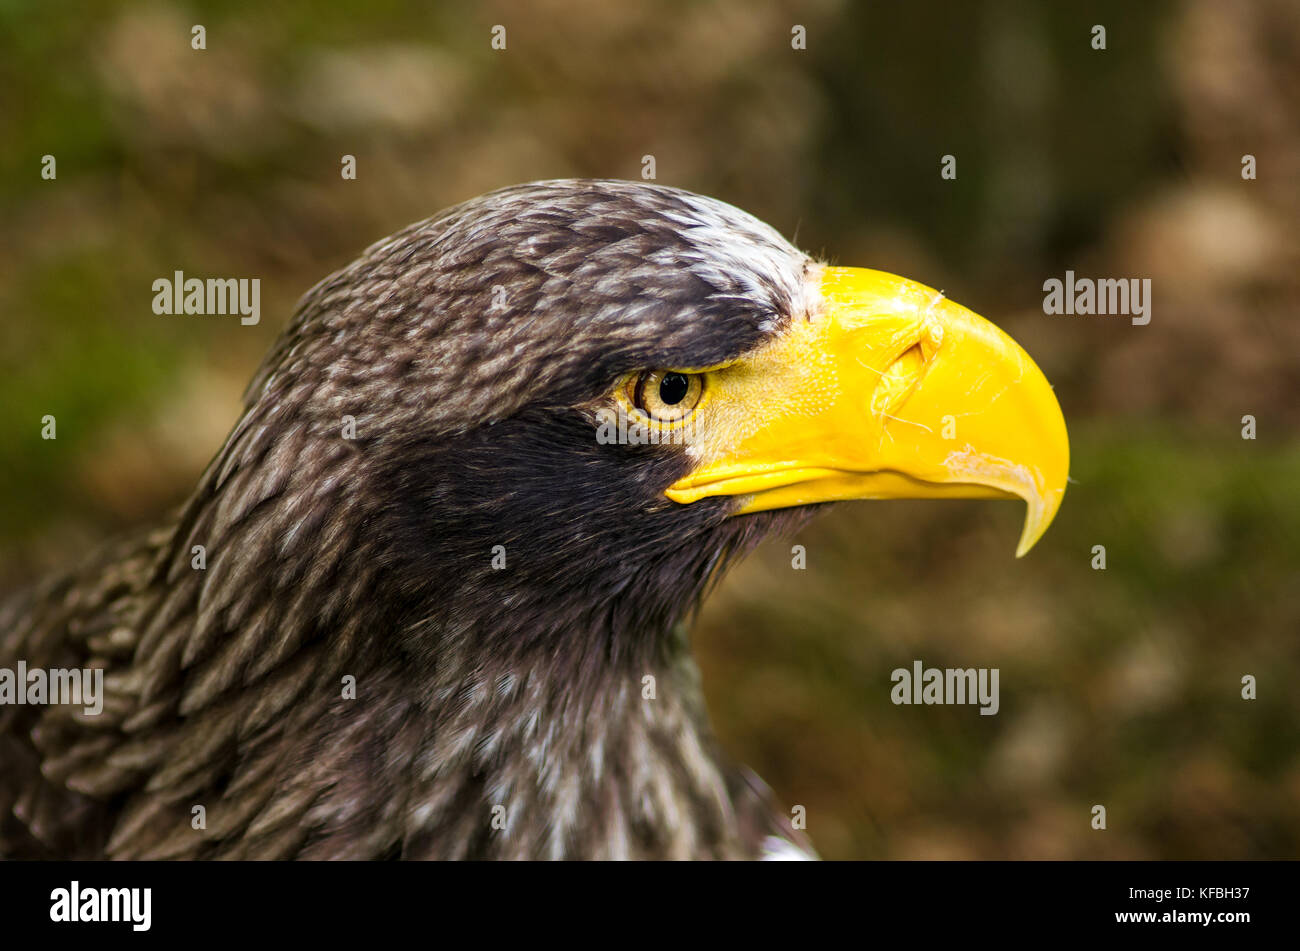 Piercing eye of a steller sea eagle Stock Photo